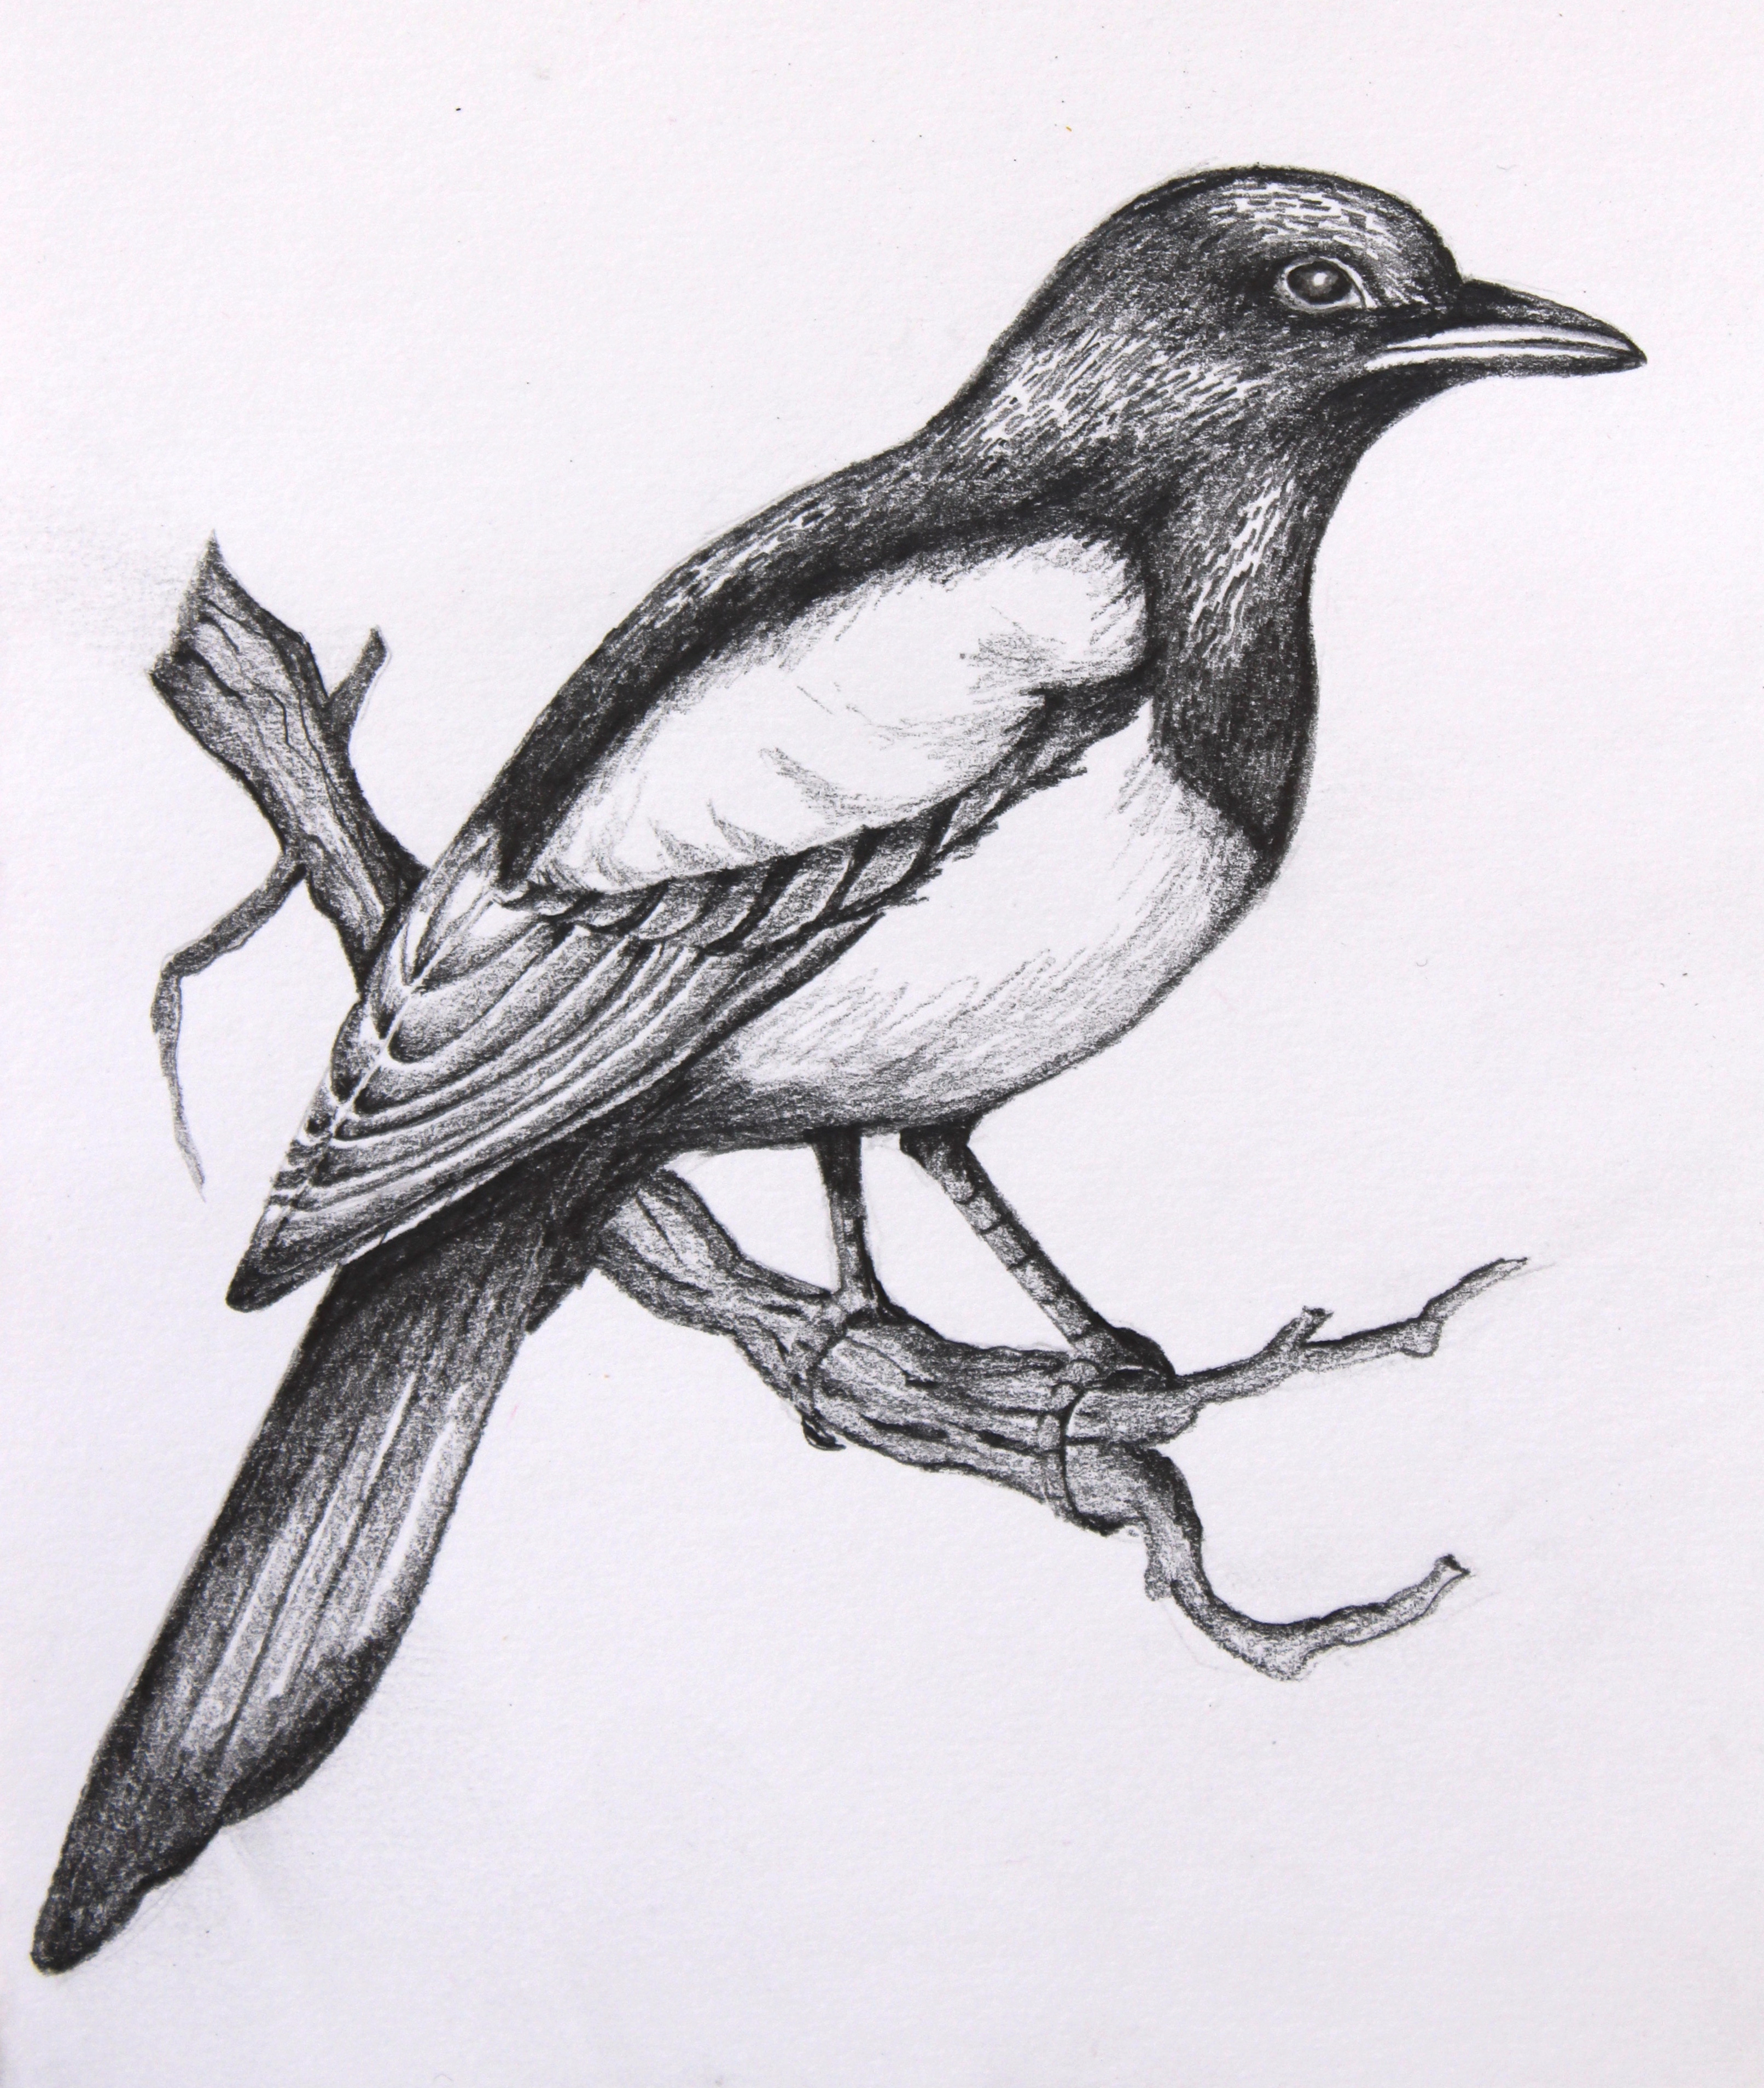 Pencil Sketch Pictures Of Birds at Explore